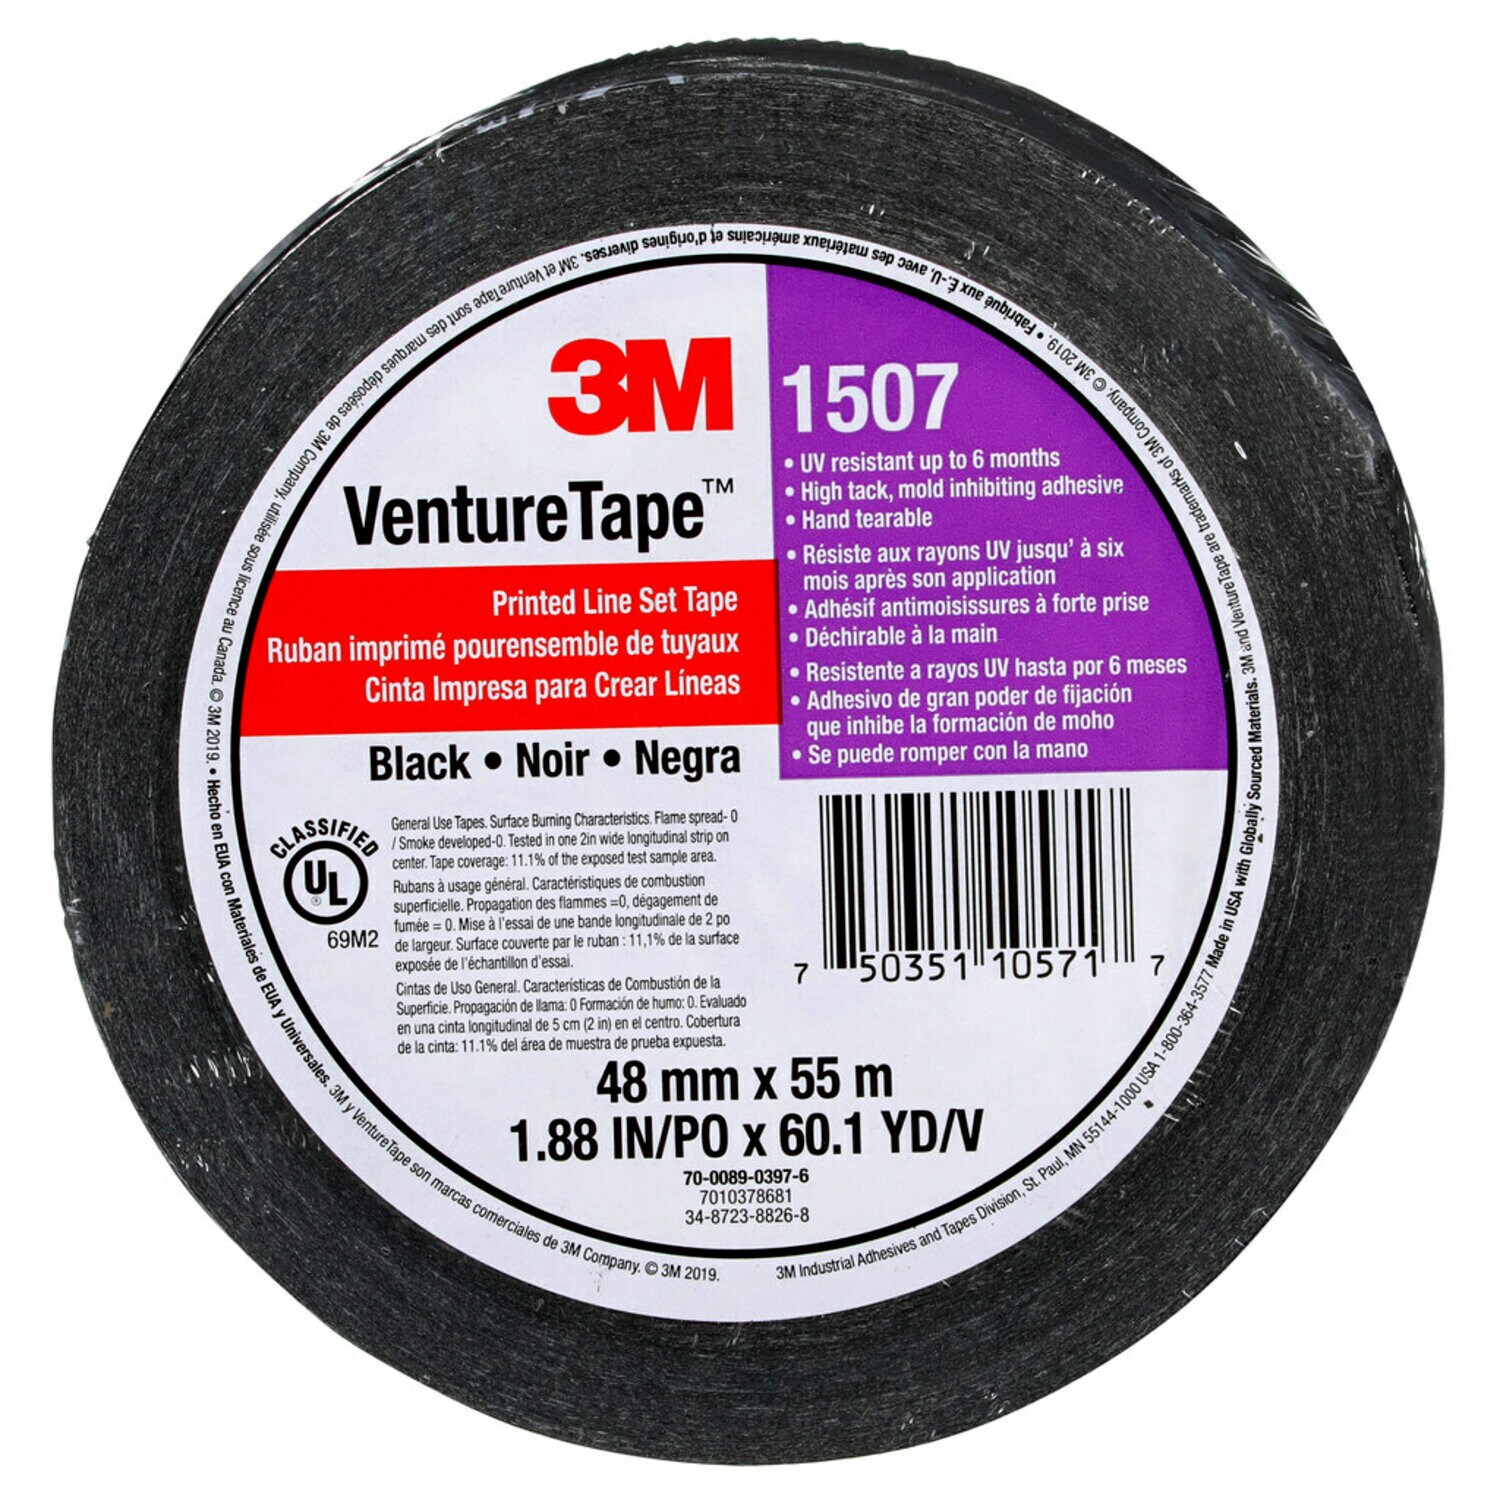 7010378681 - "3M Venture Tape Printed Line Set Tape 1507, Black, 48 mm x 55 m,
24
Rolls/Case"